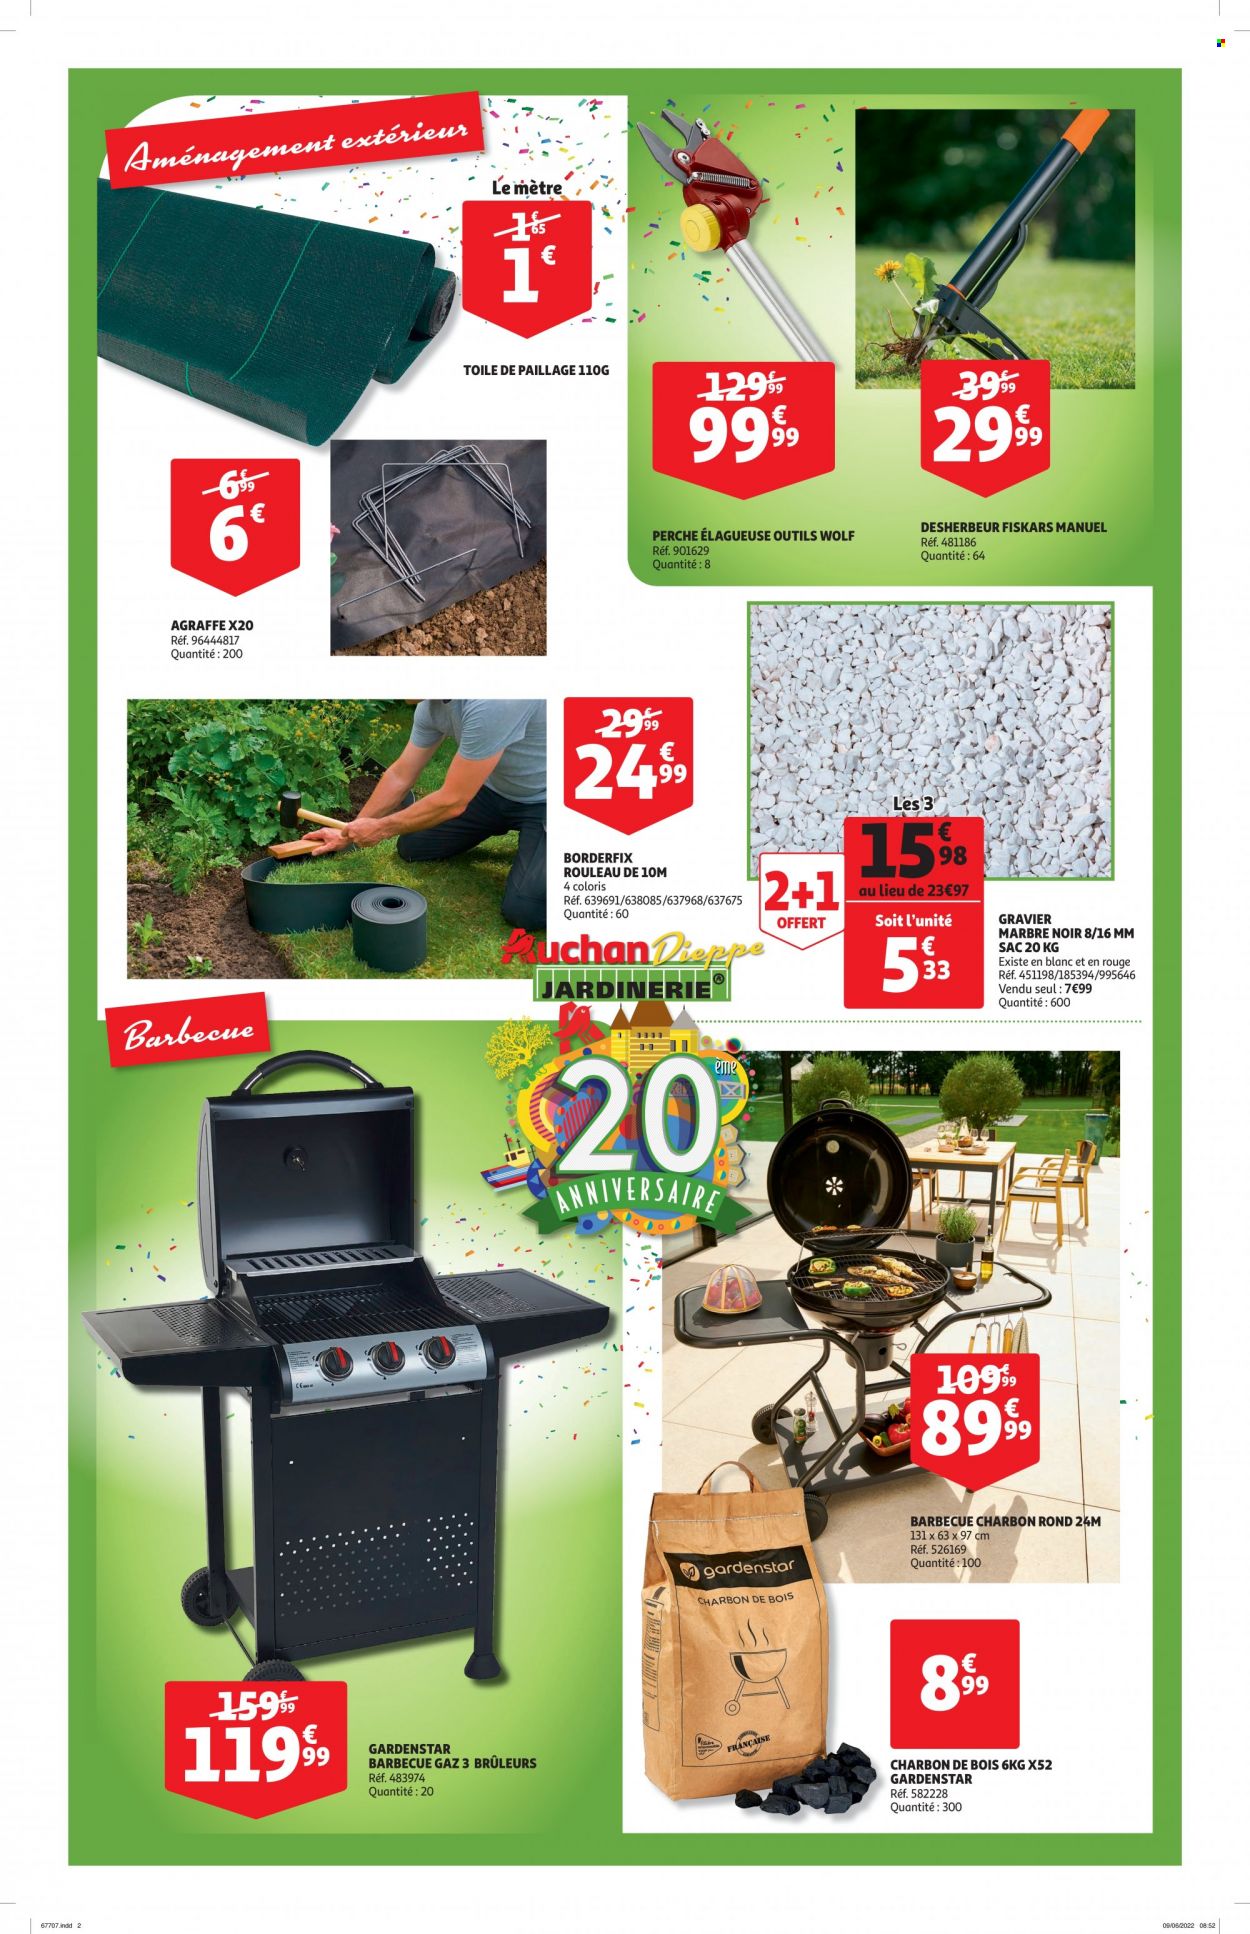 Catalogue Auchan - 21.06.2022 - 28.06.2022. 